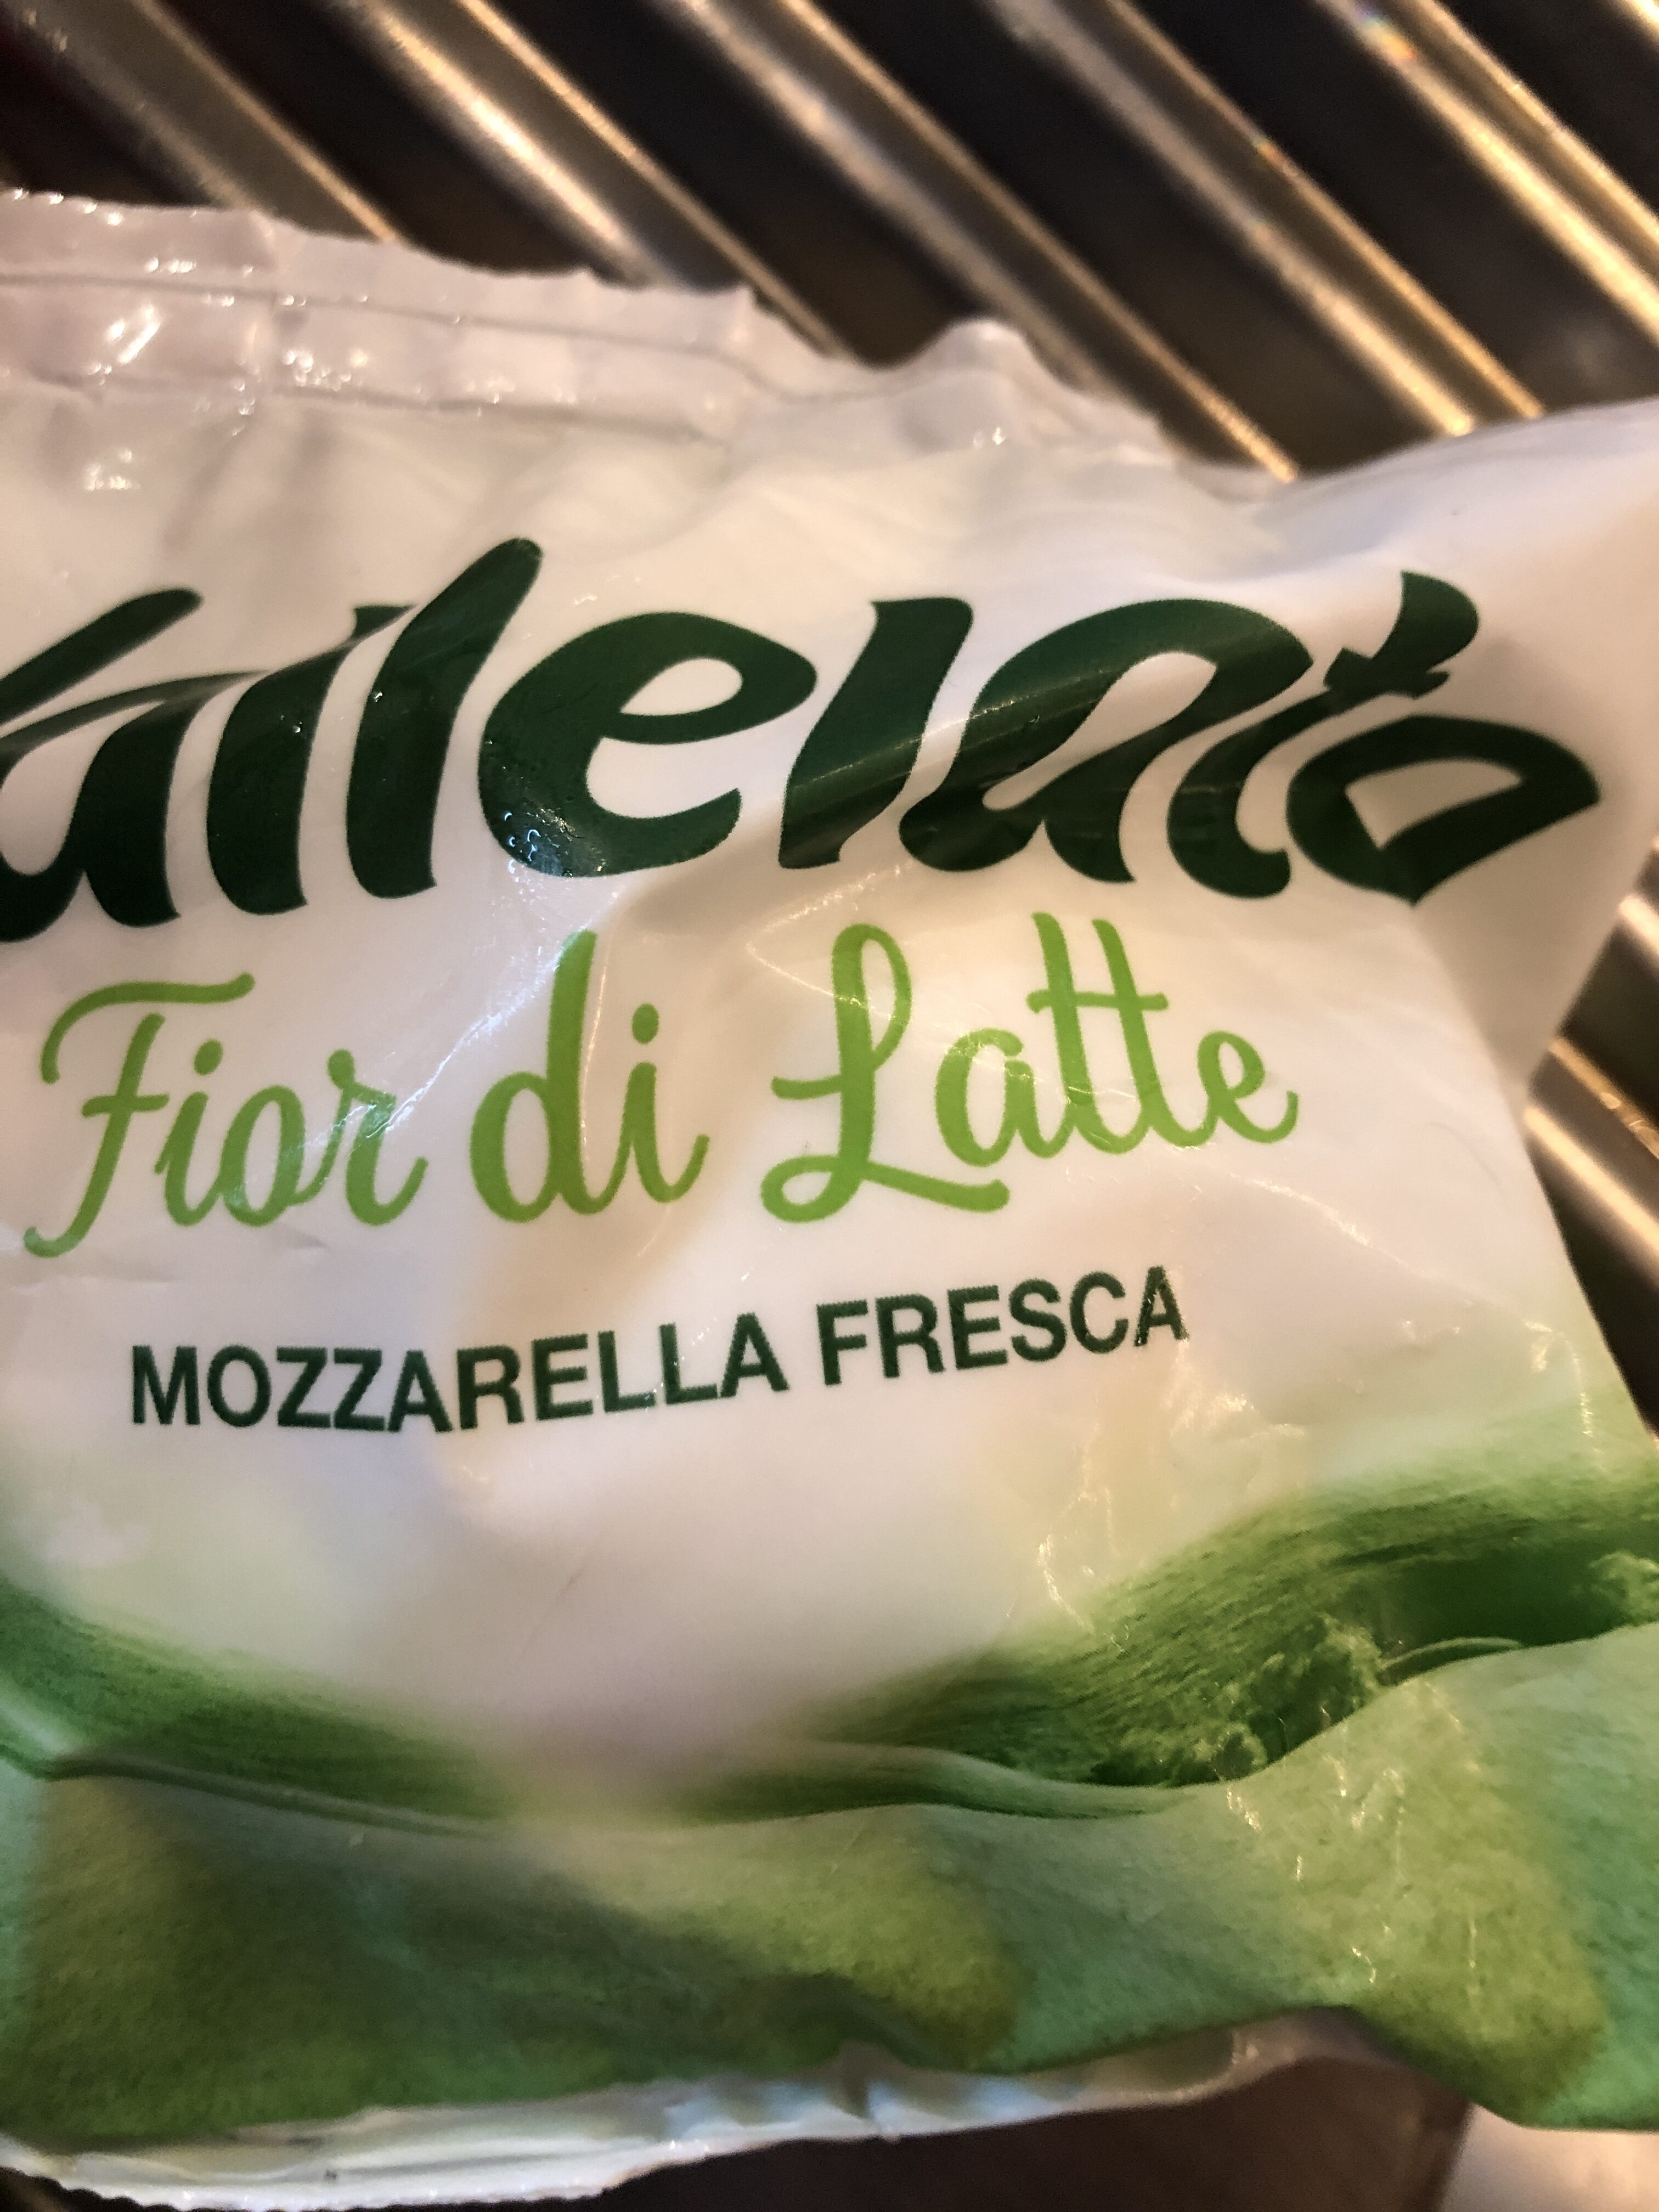 Mozzarella vallelata - Product - en